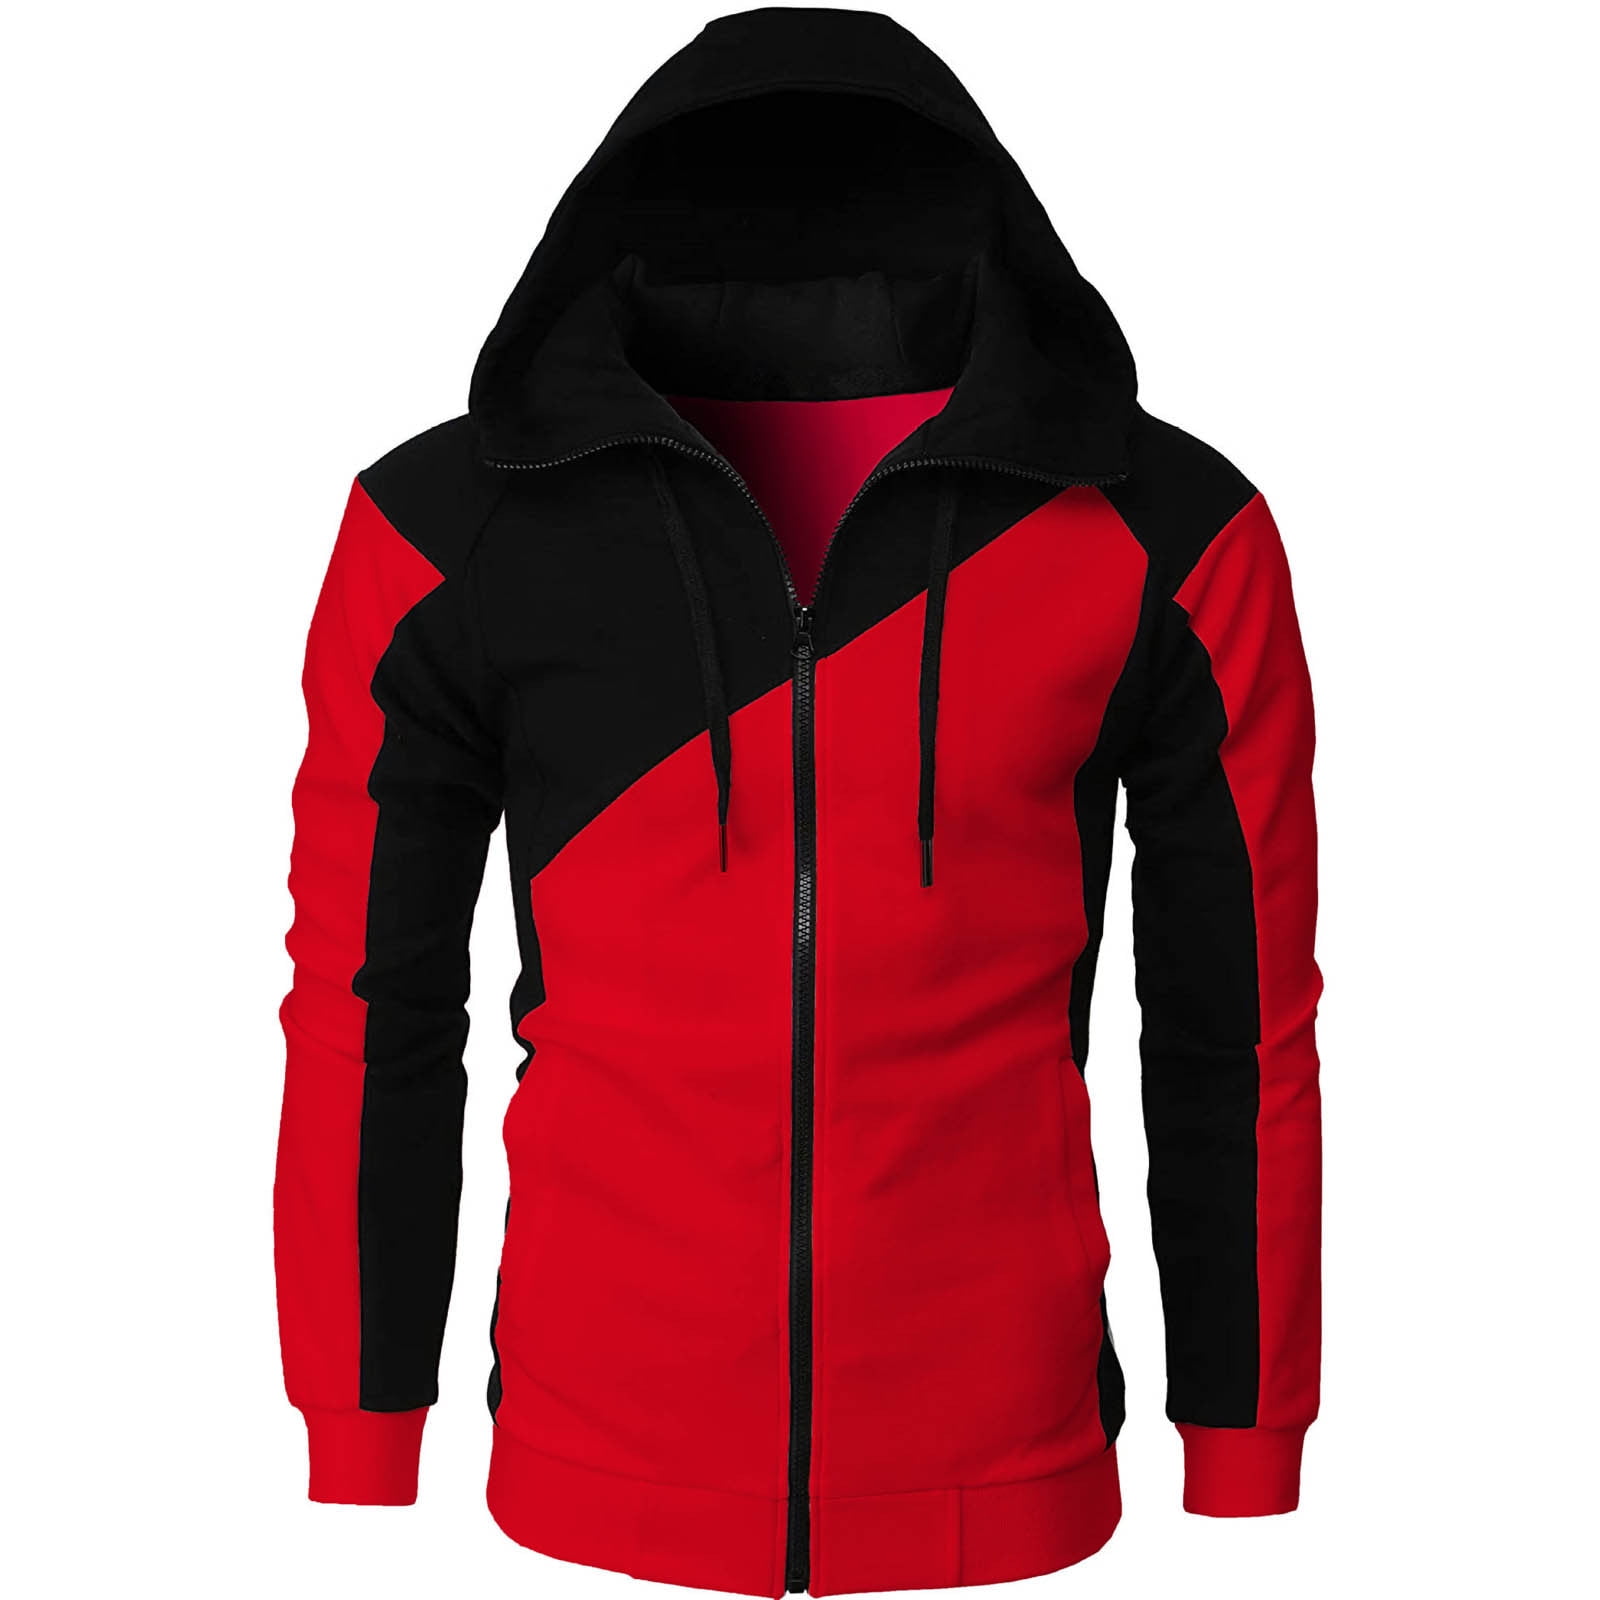 Hfyihgf Men's Jacket Color Block Full Zip Hoodie Long Sleeve Slim Fit  Lightweight Gym Sports Hooded Sweatshirt Coat with Pocket(Black,XL) 